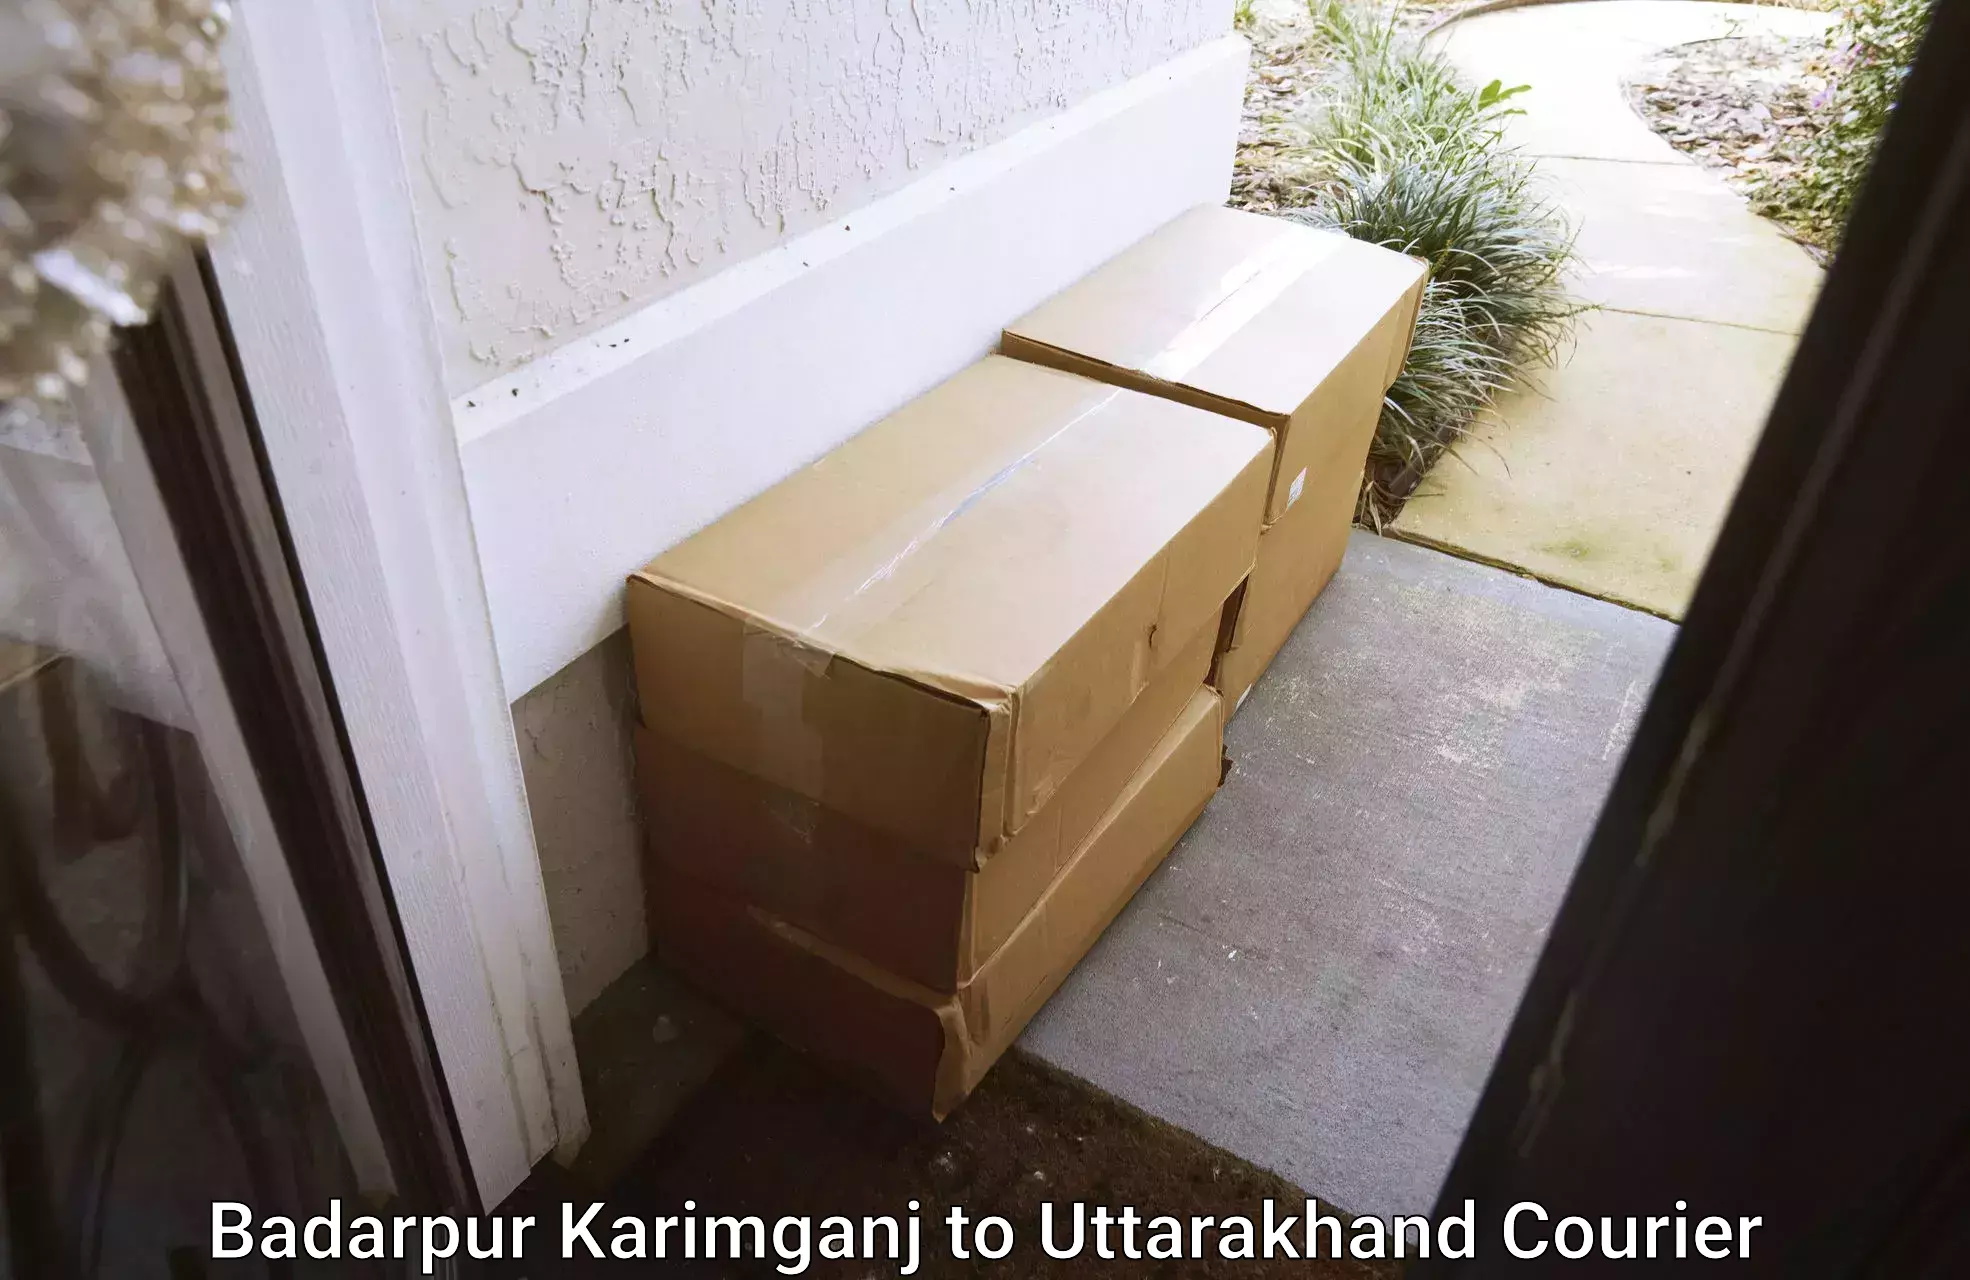 Global logistics network Badarpur Karimganj to Uttarakhand